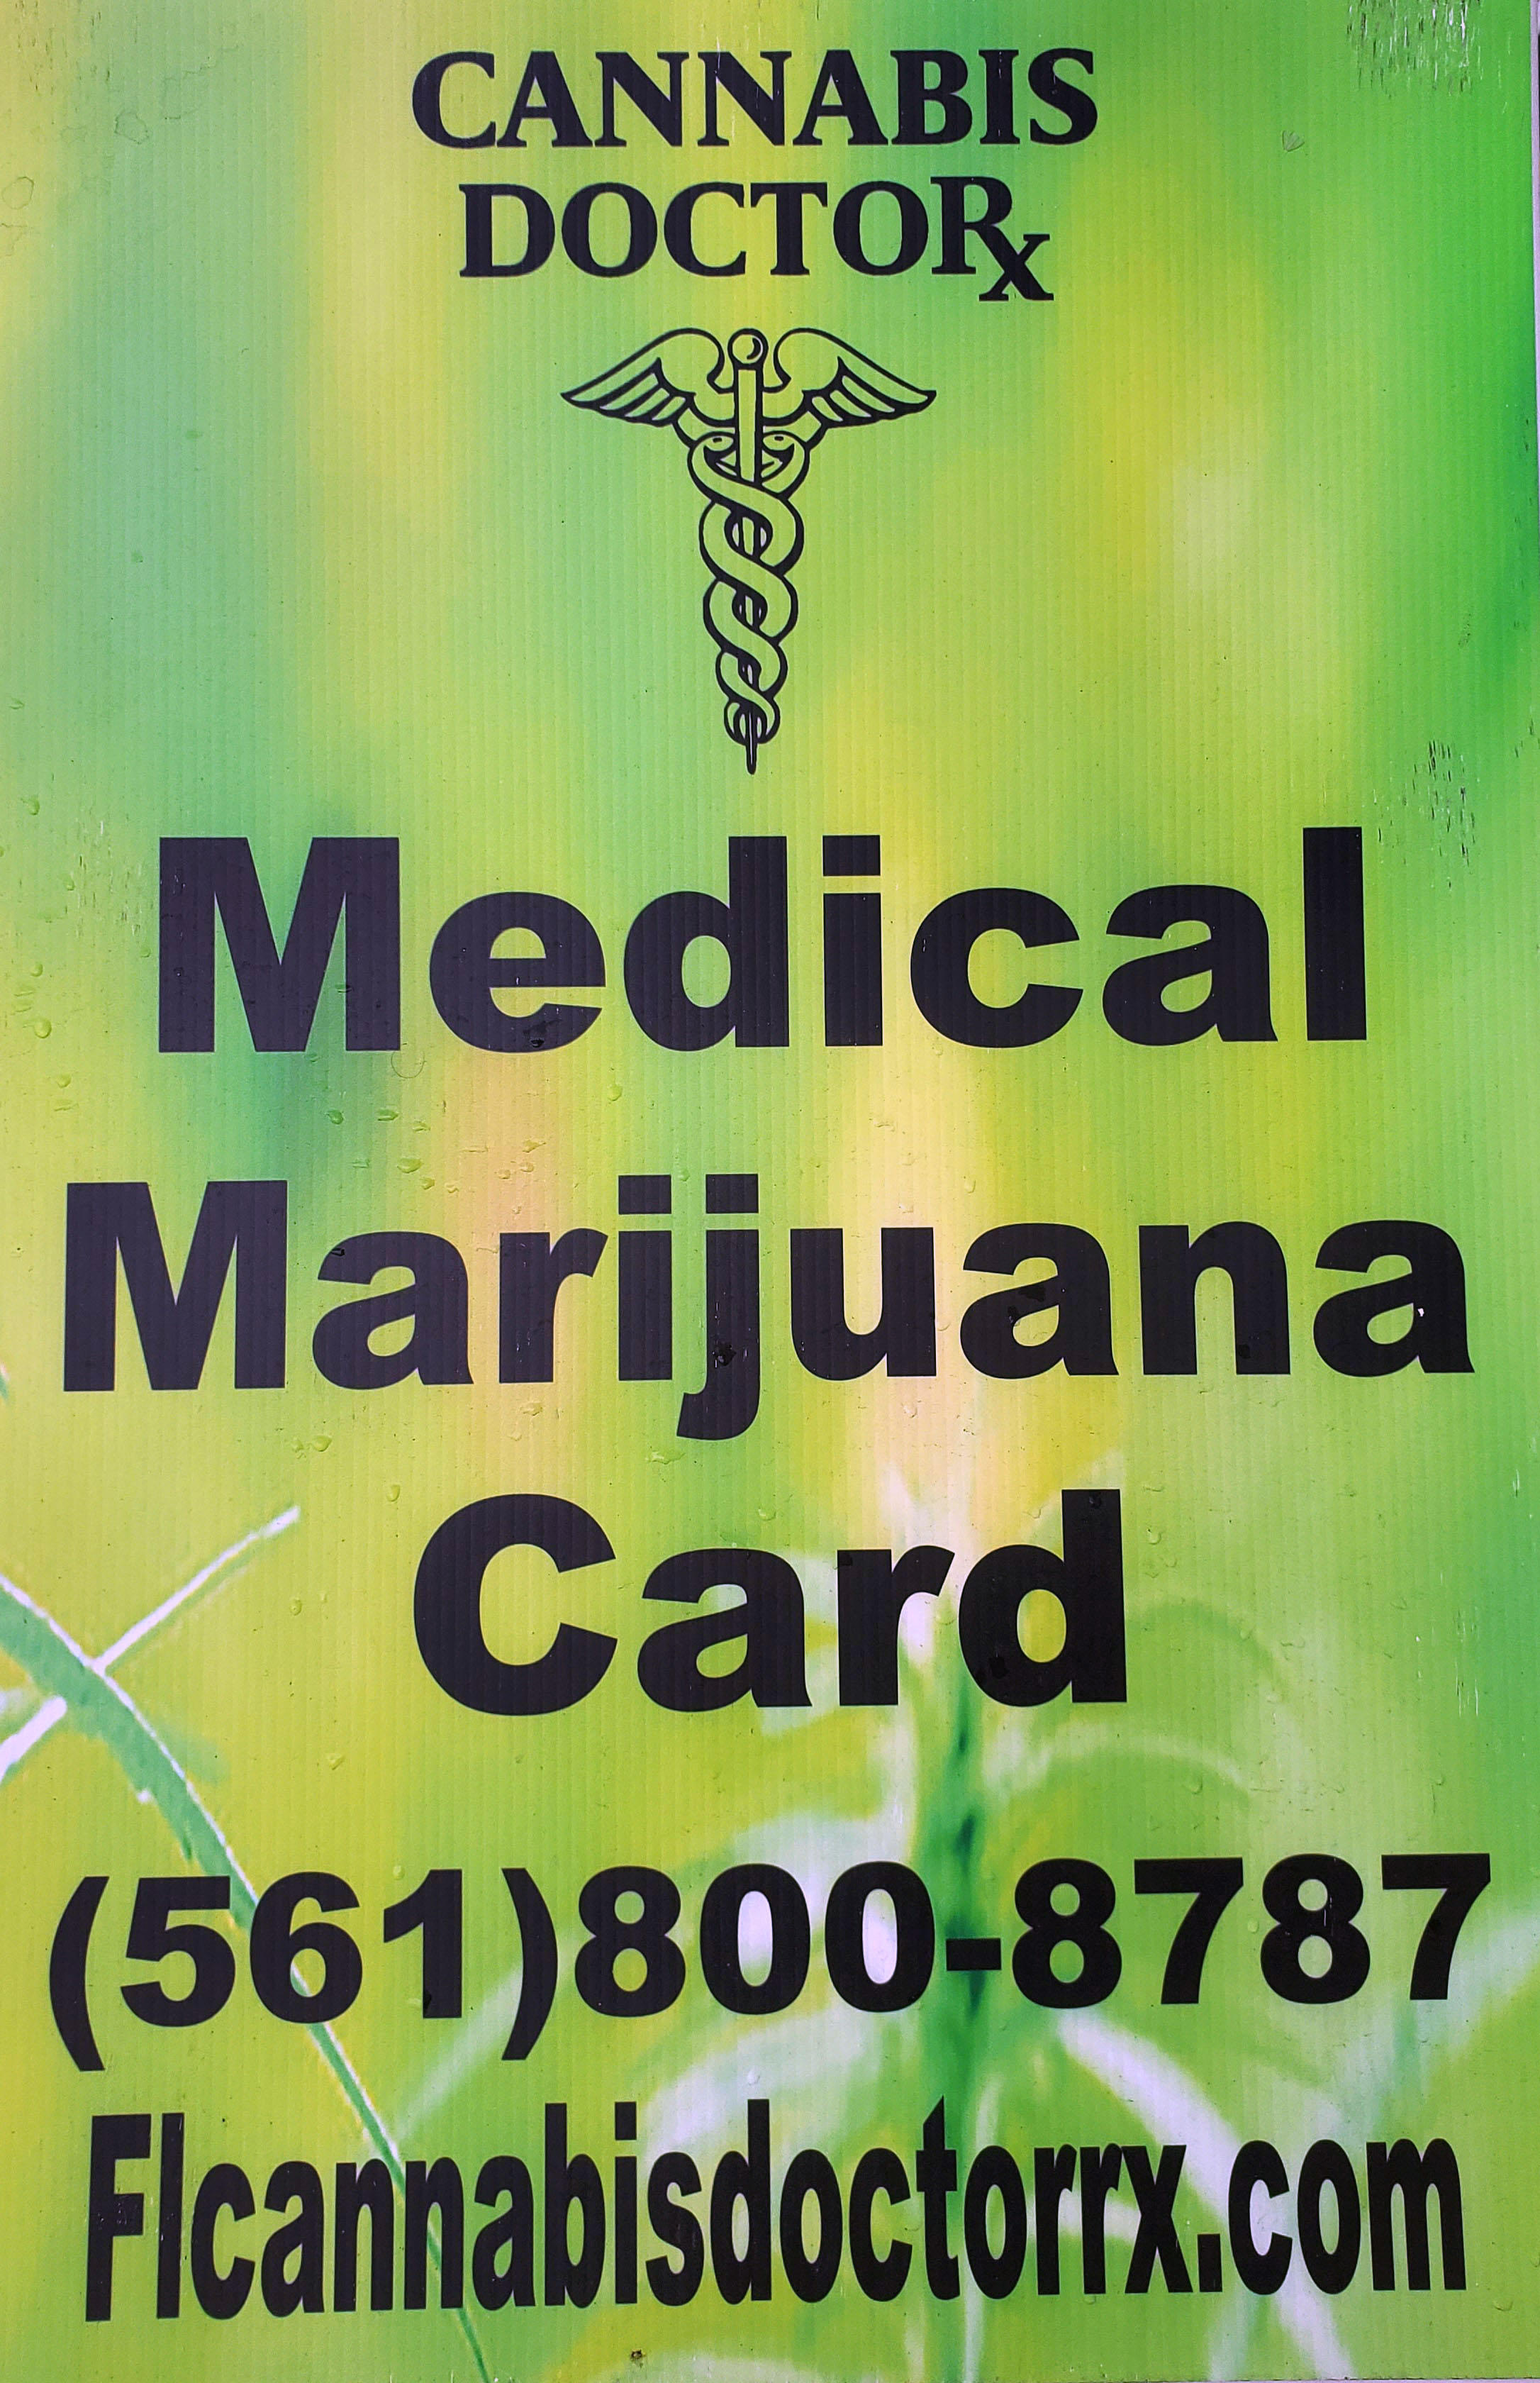 Cannabis Doctor X Photo